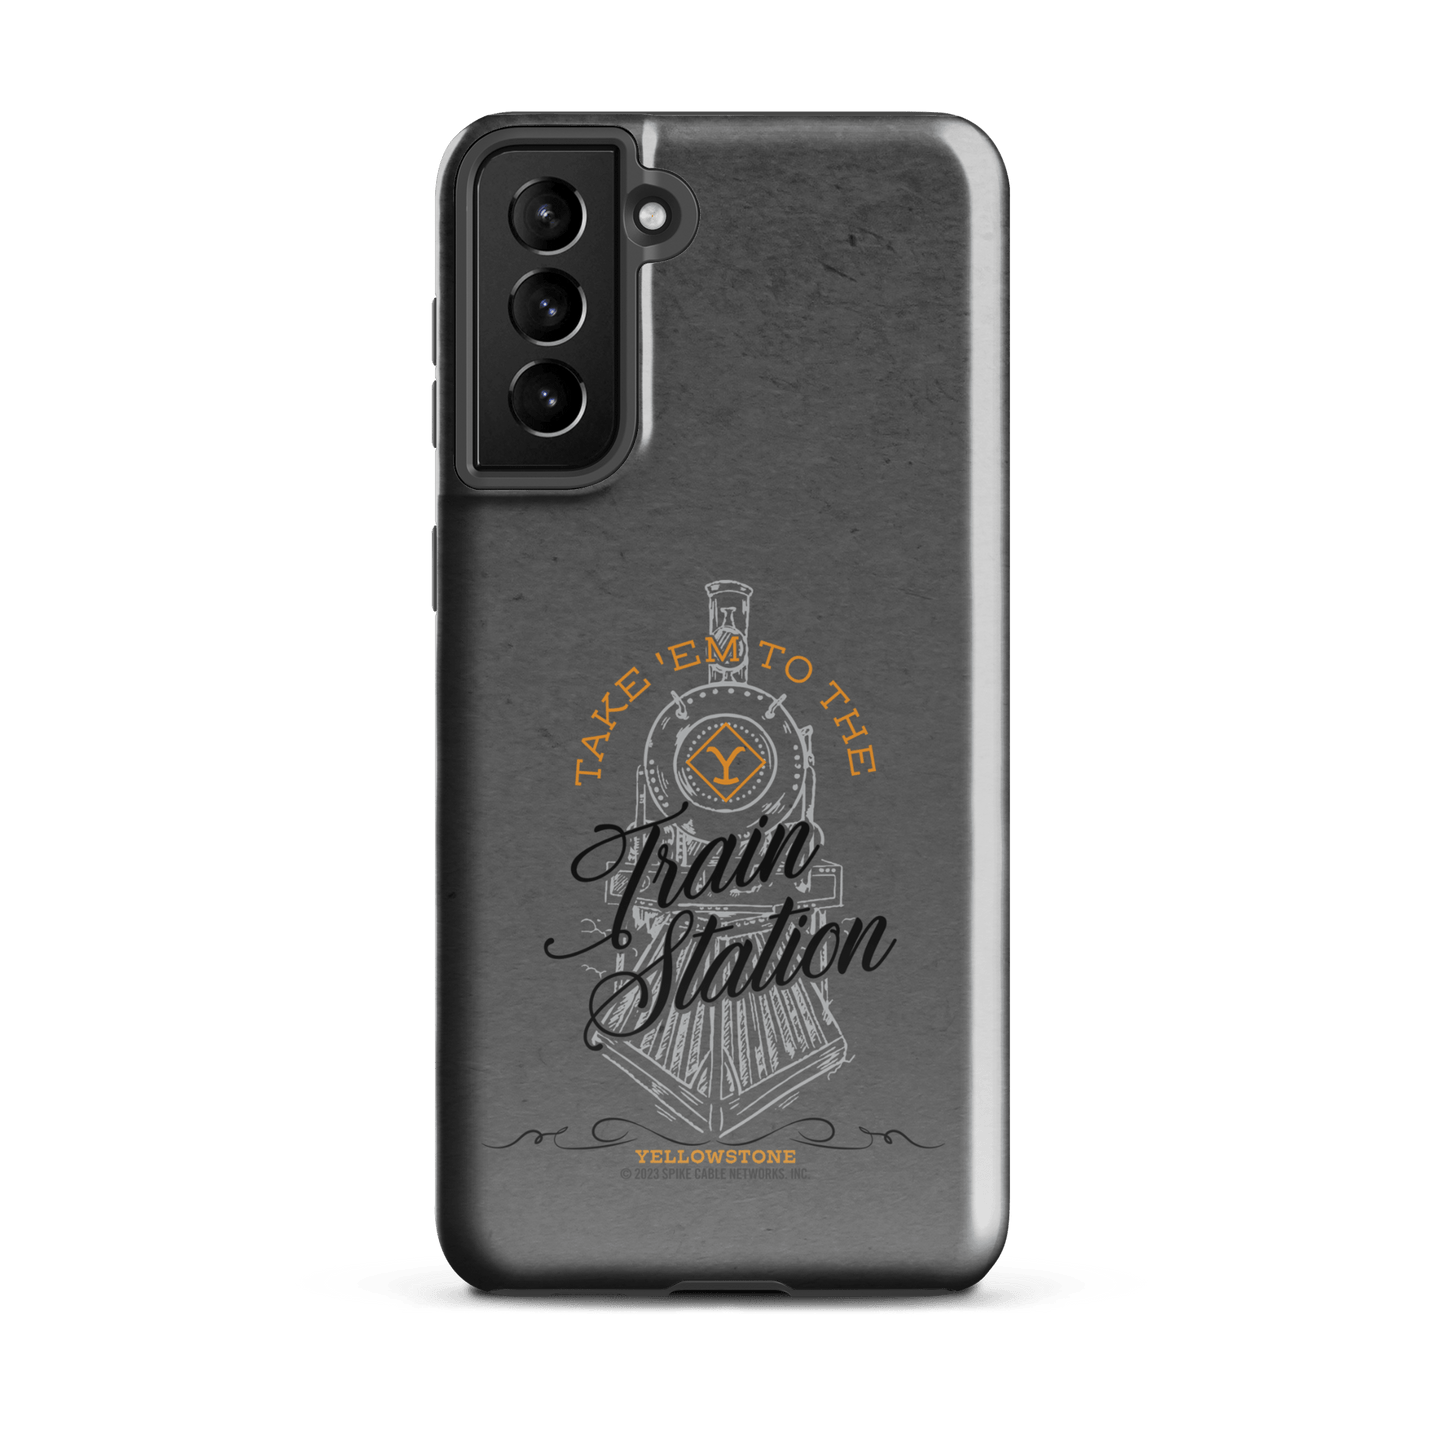 Yellowstone Train Station Tough Phone Case - Samsung - Paramount Shop